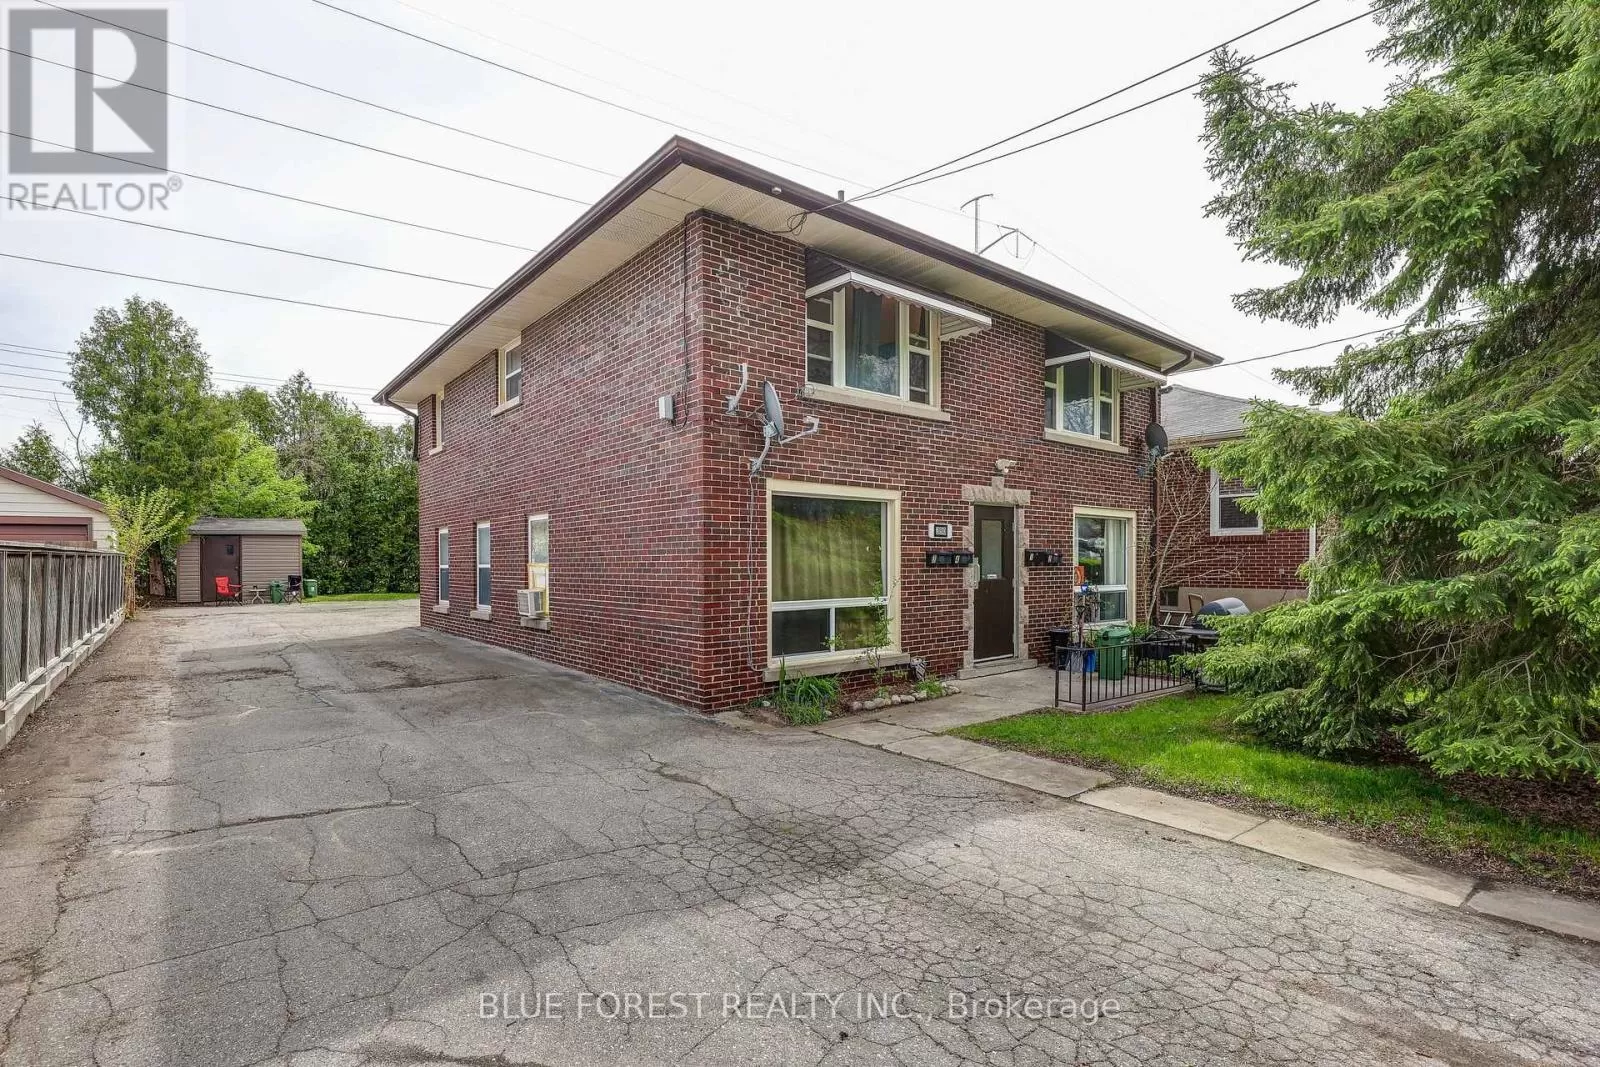 Fourplex for rent: 390 Thiel Street, London, Ontario N5W 4P8